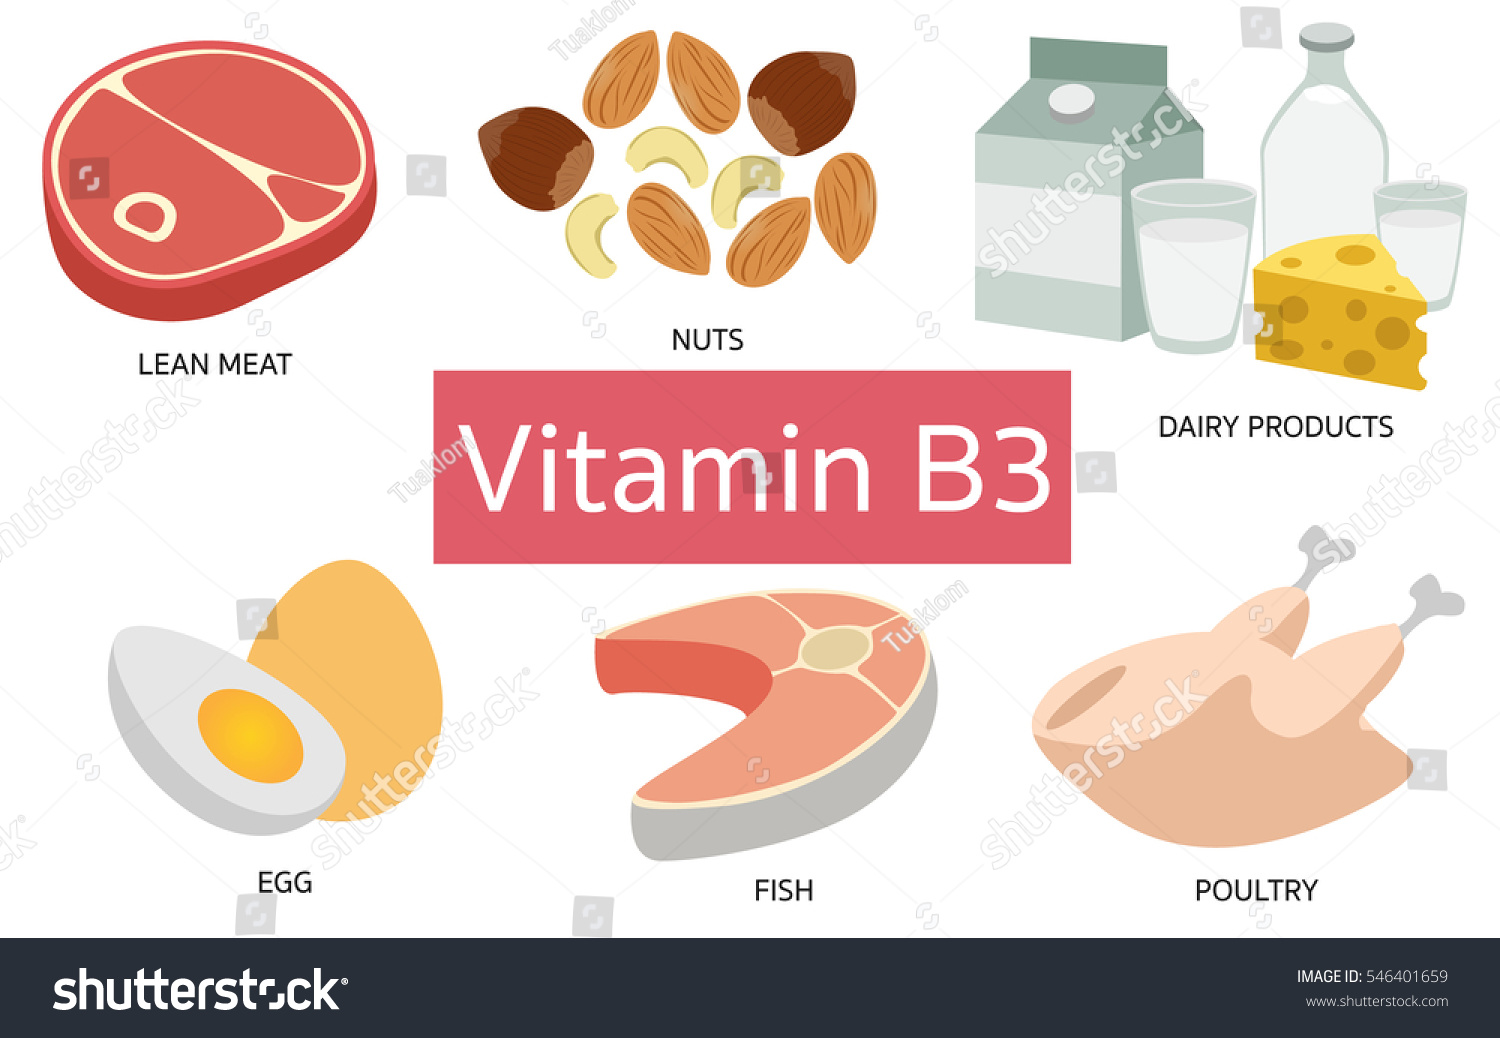 Vitamin B3 Food Sources